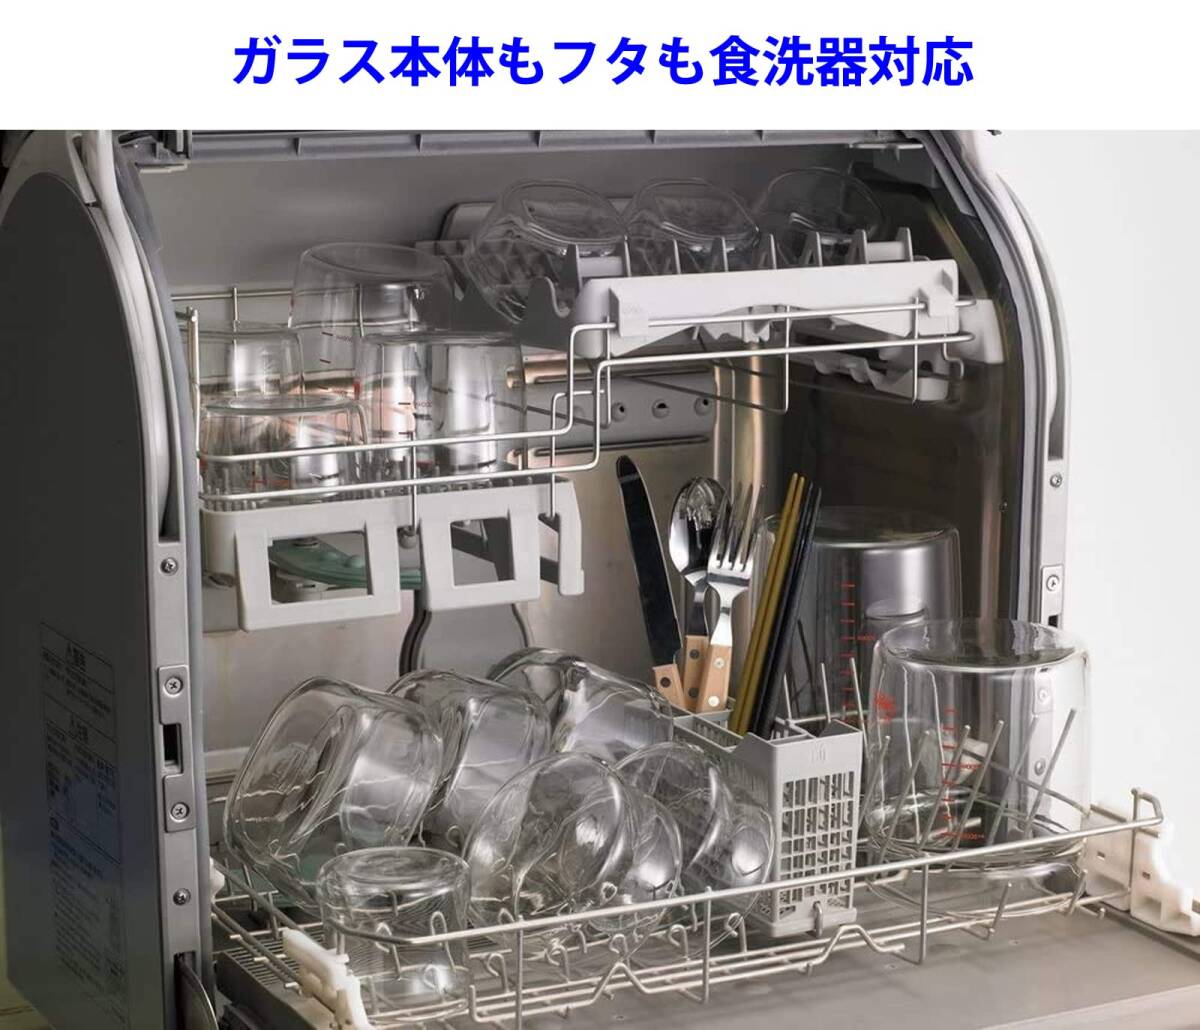 iwaki(イワキ) 耐熱ガラス 密閉容器 シンジカトウ 北欧の庭 システムセット・ミニ パック&レンジ PS-PRNSNF4_画像8